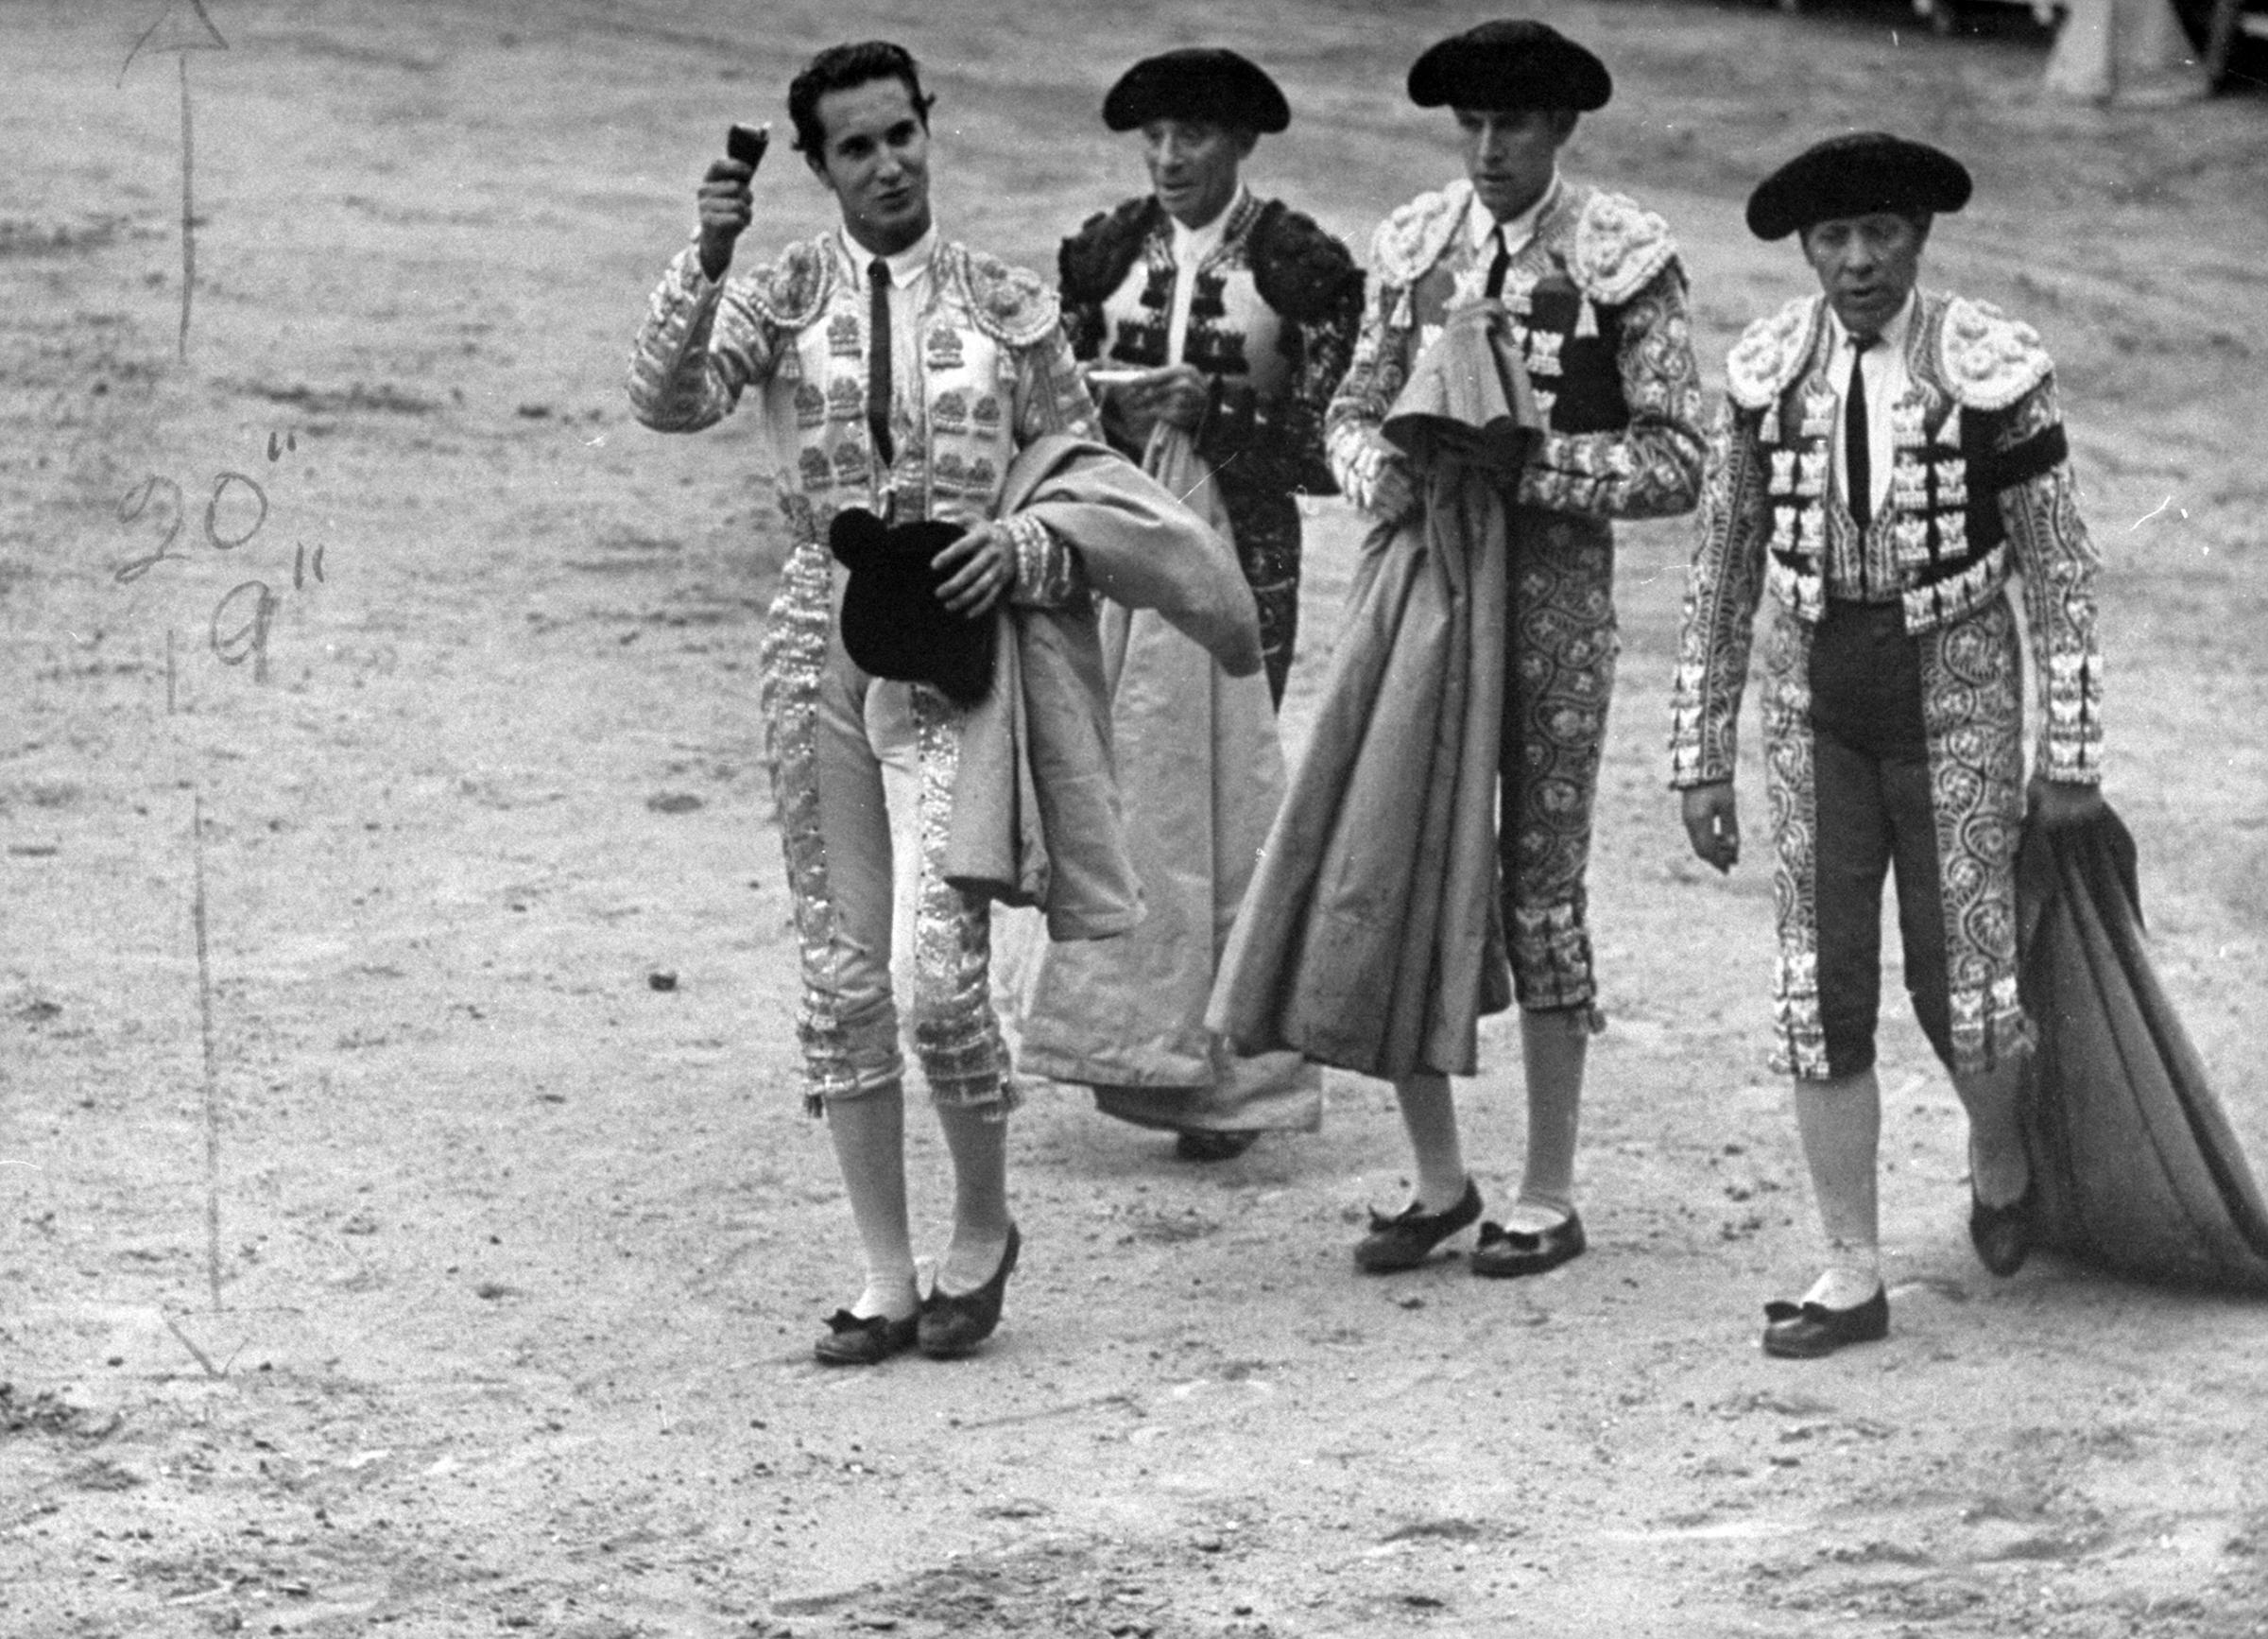 Matadors in the bullring during the festival of San Fermín.